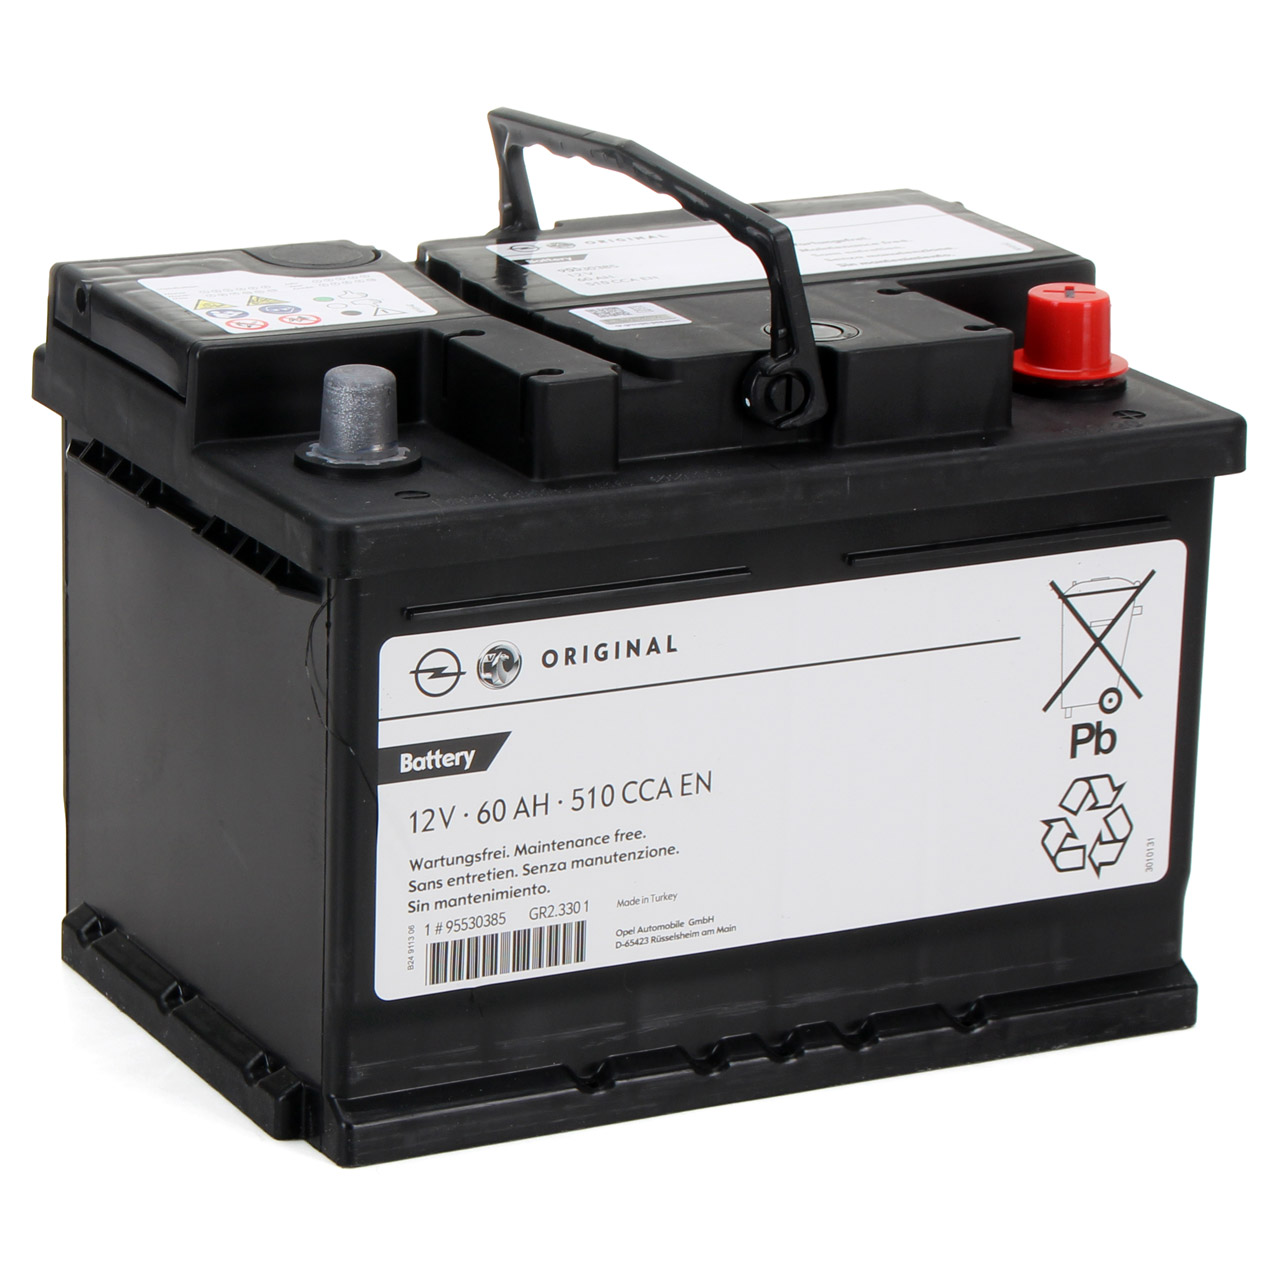 ORIGINAL Opel Autobatterie Starterbatterie 12V 60Ah 510 CCA EN 95523432 B-WARE